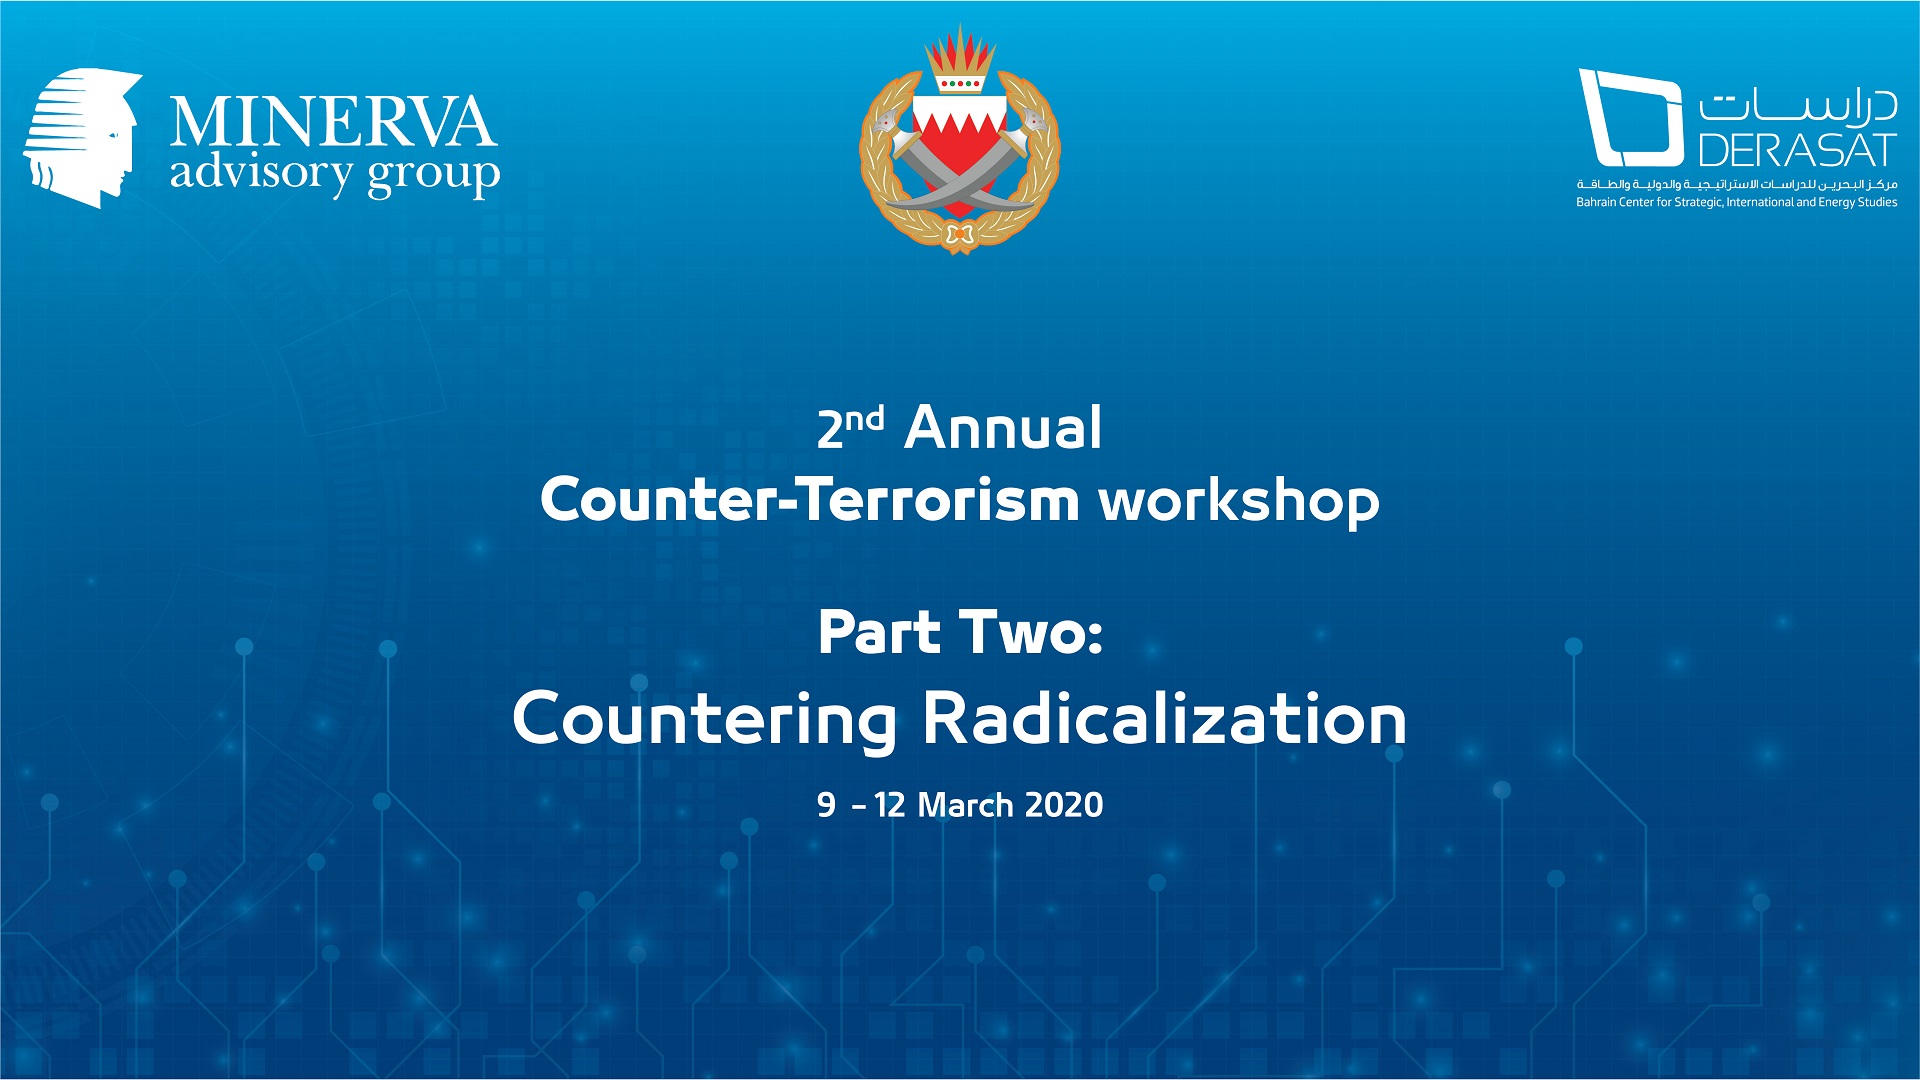 Derasat holds Counter-terrorism Workshops